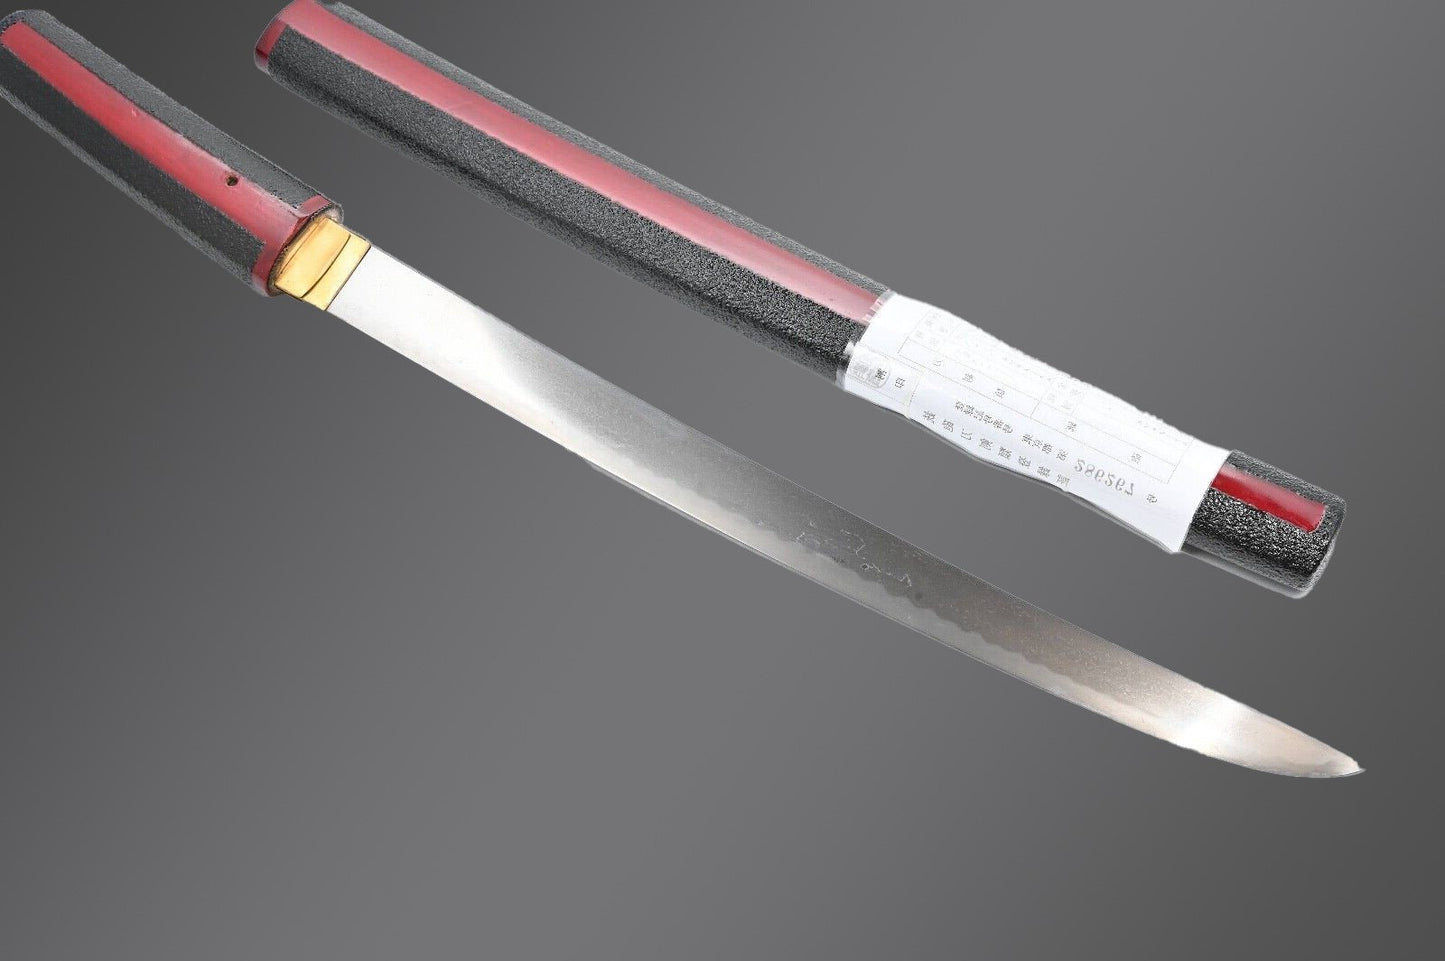 Muromachi Era Unique Ancient Japanese Wakizashi Sword Mumei Blade Rare Saya Vintage Antique Samurai Asian Katana Tamahagane Material.